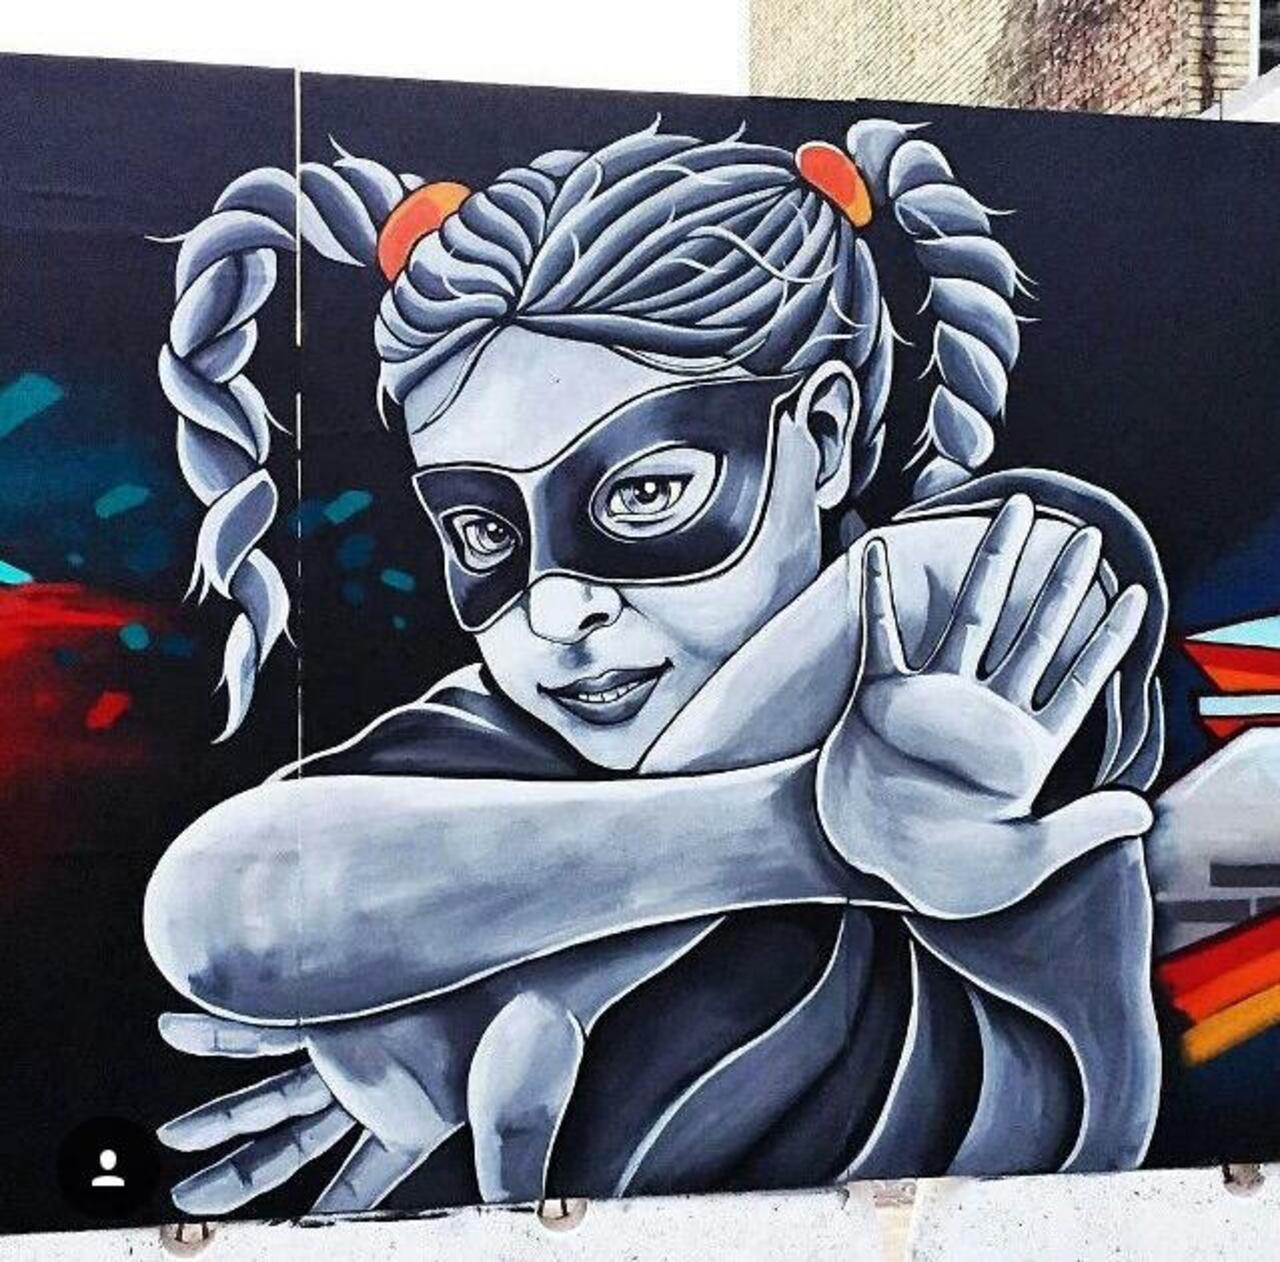 Street Art by Stinehvid 

#art #graffiti #mural #streetart http://t.co/8WsykoDr8W